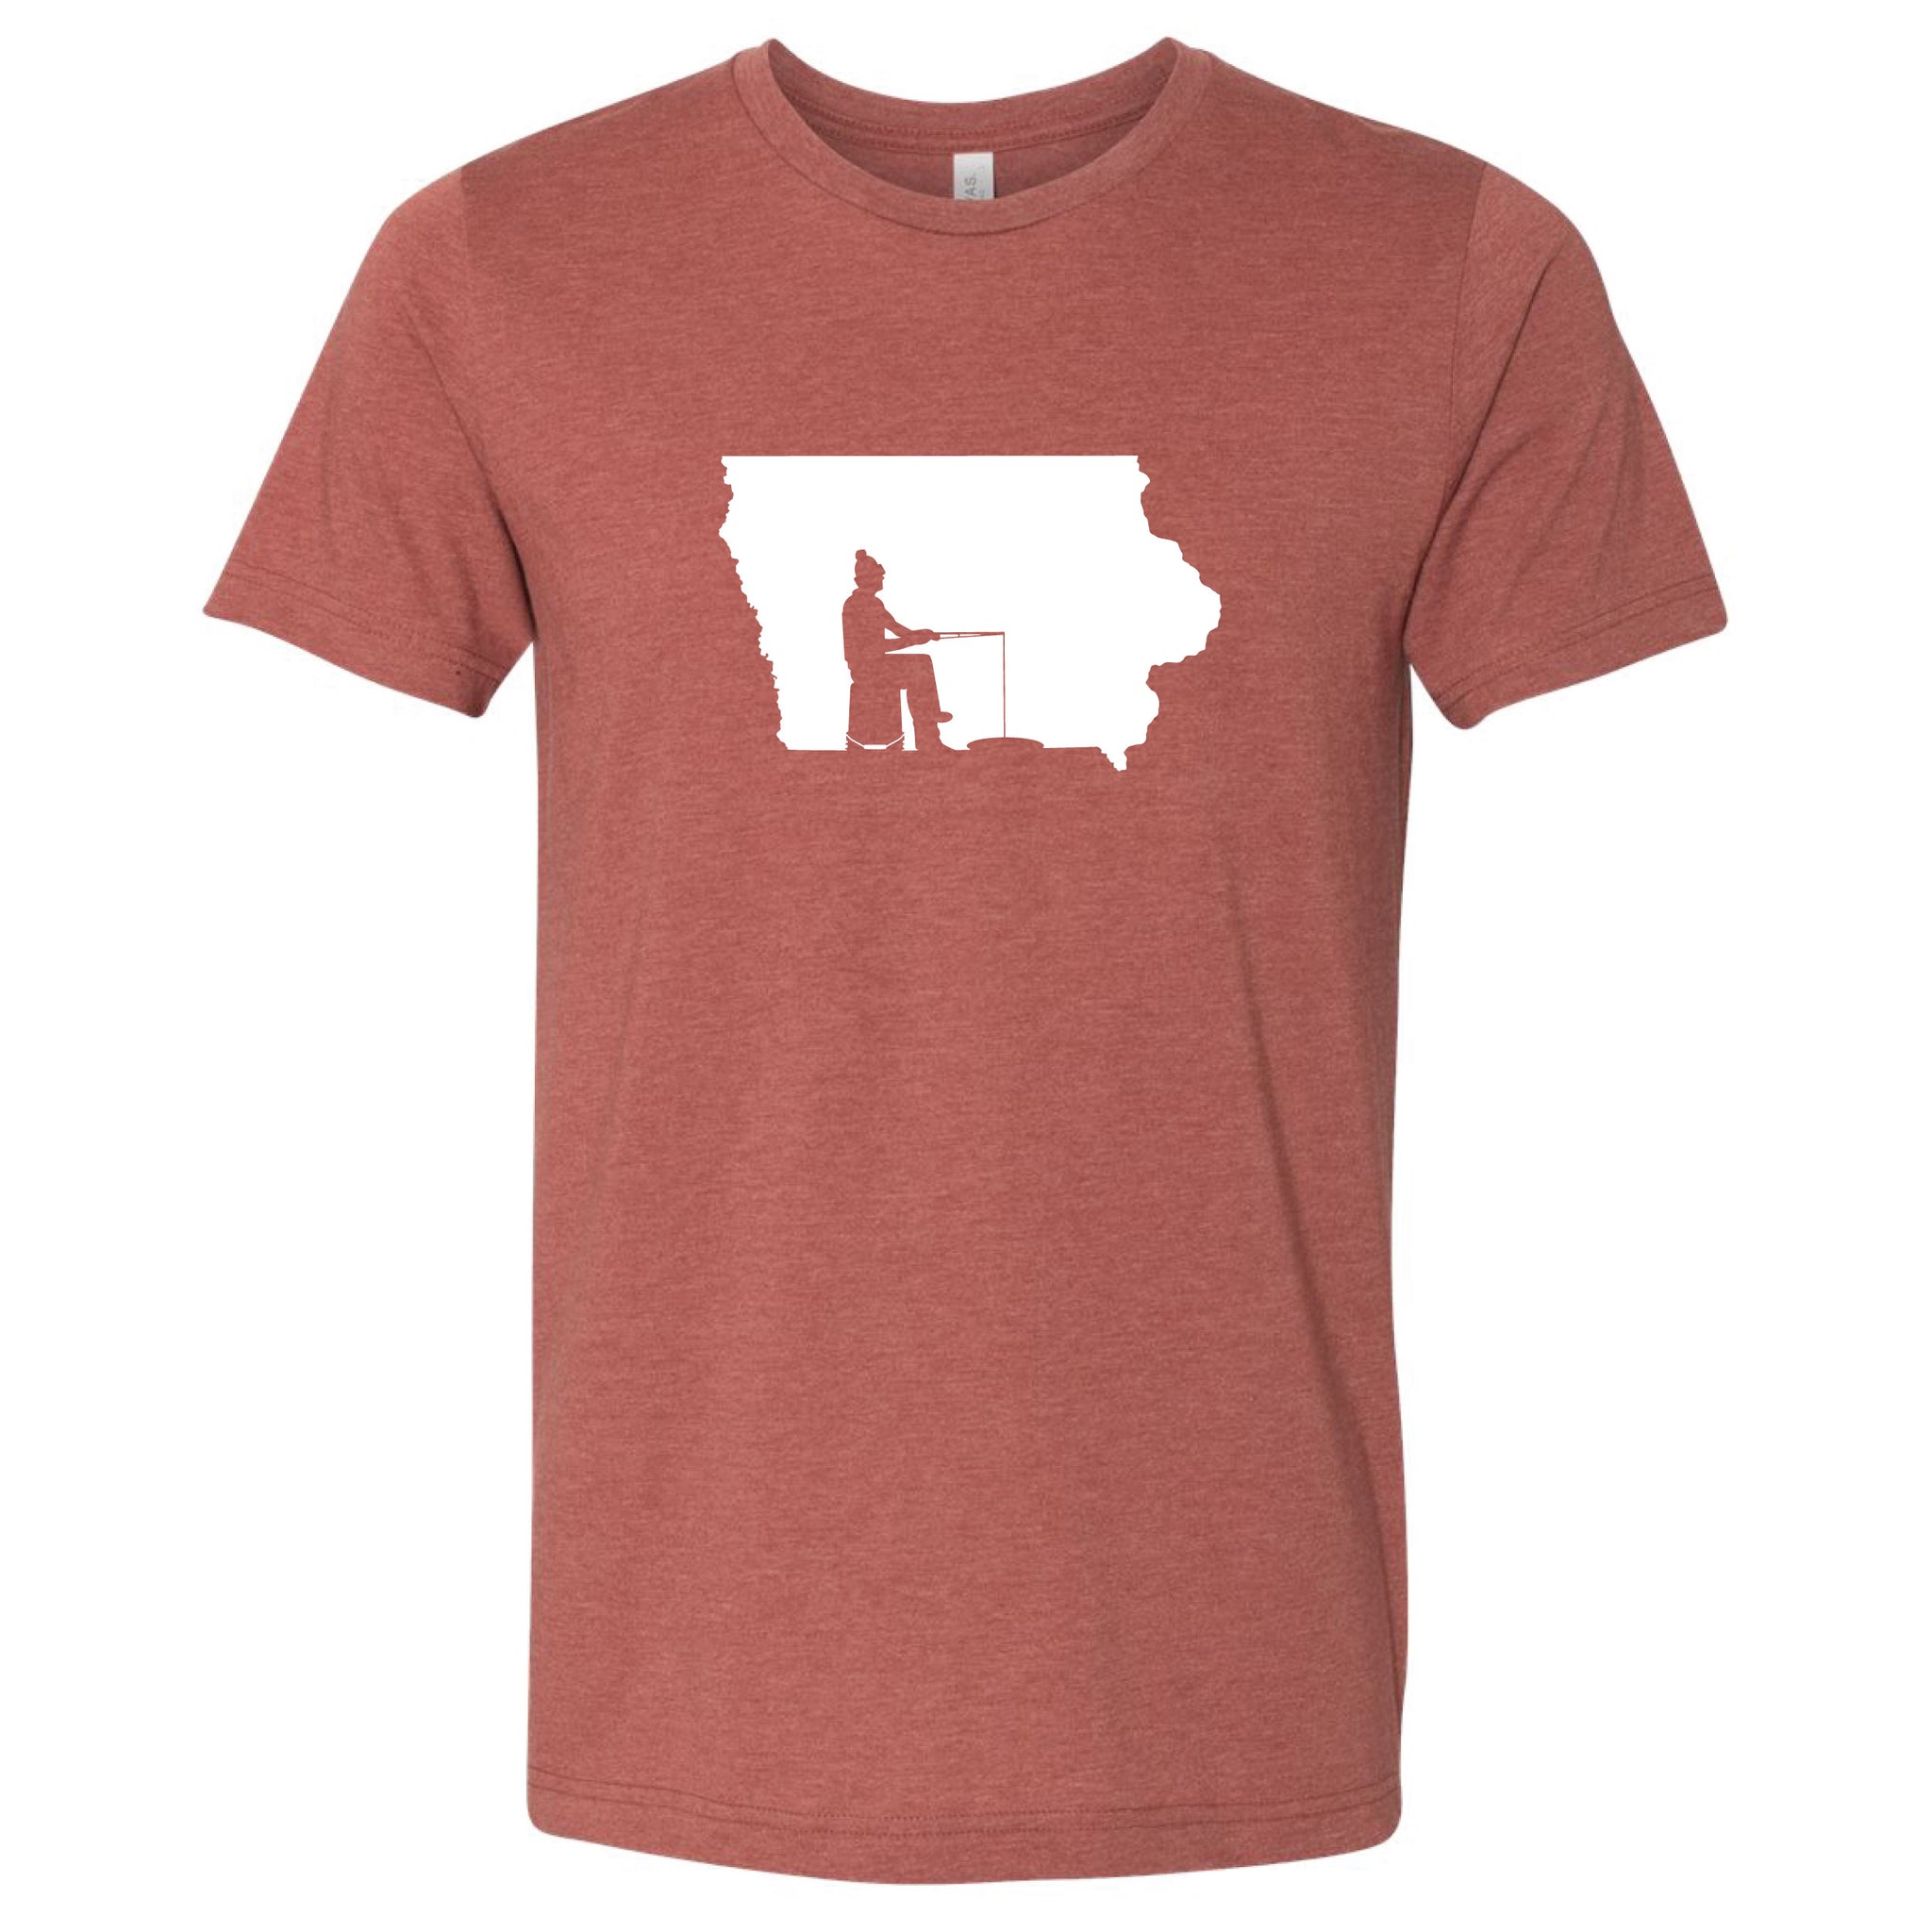 Ice Fishing Iowa T-Shirt – Iowa Awesome